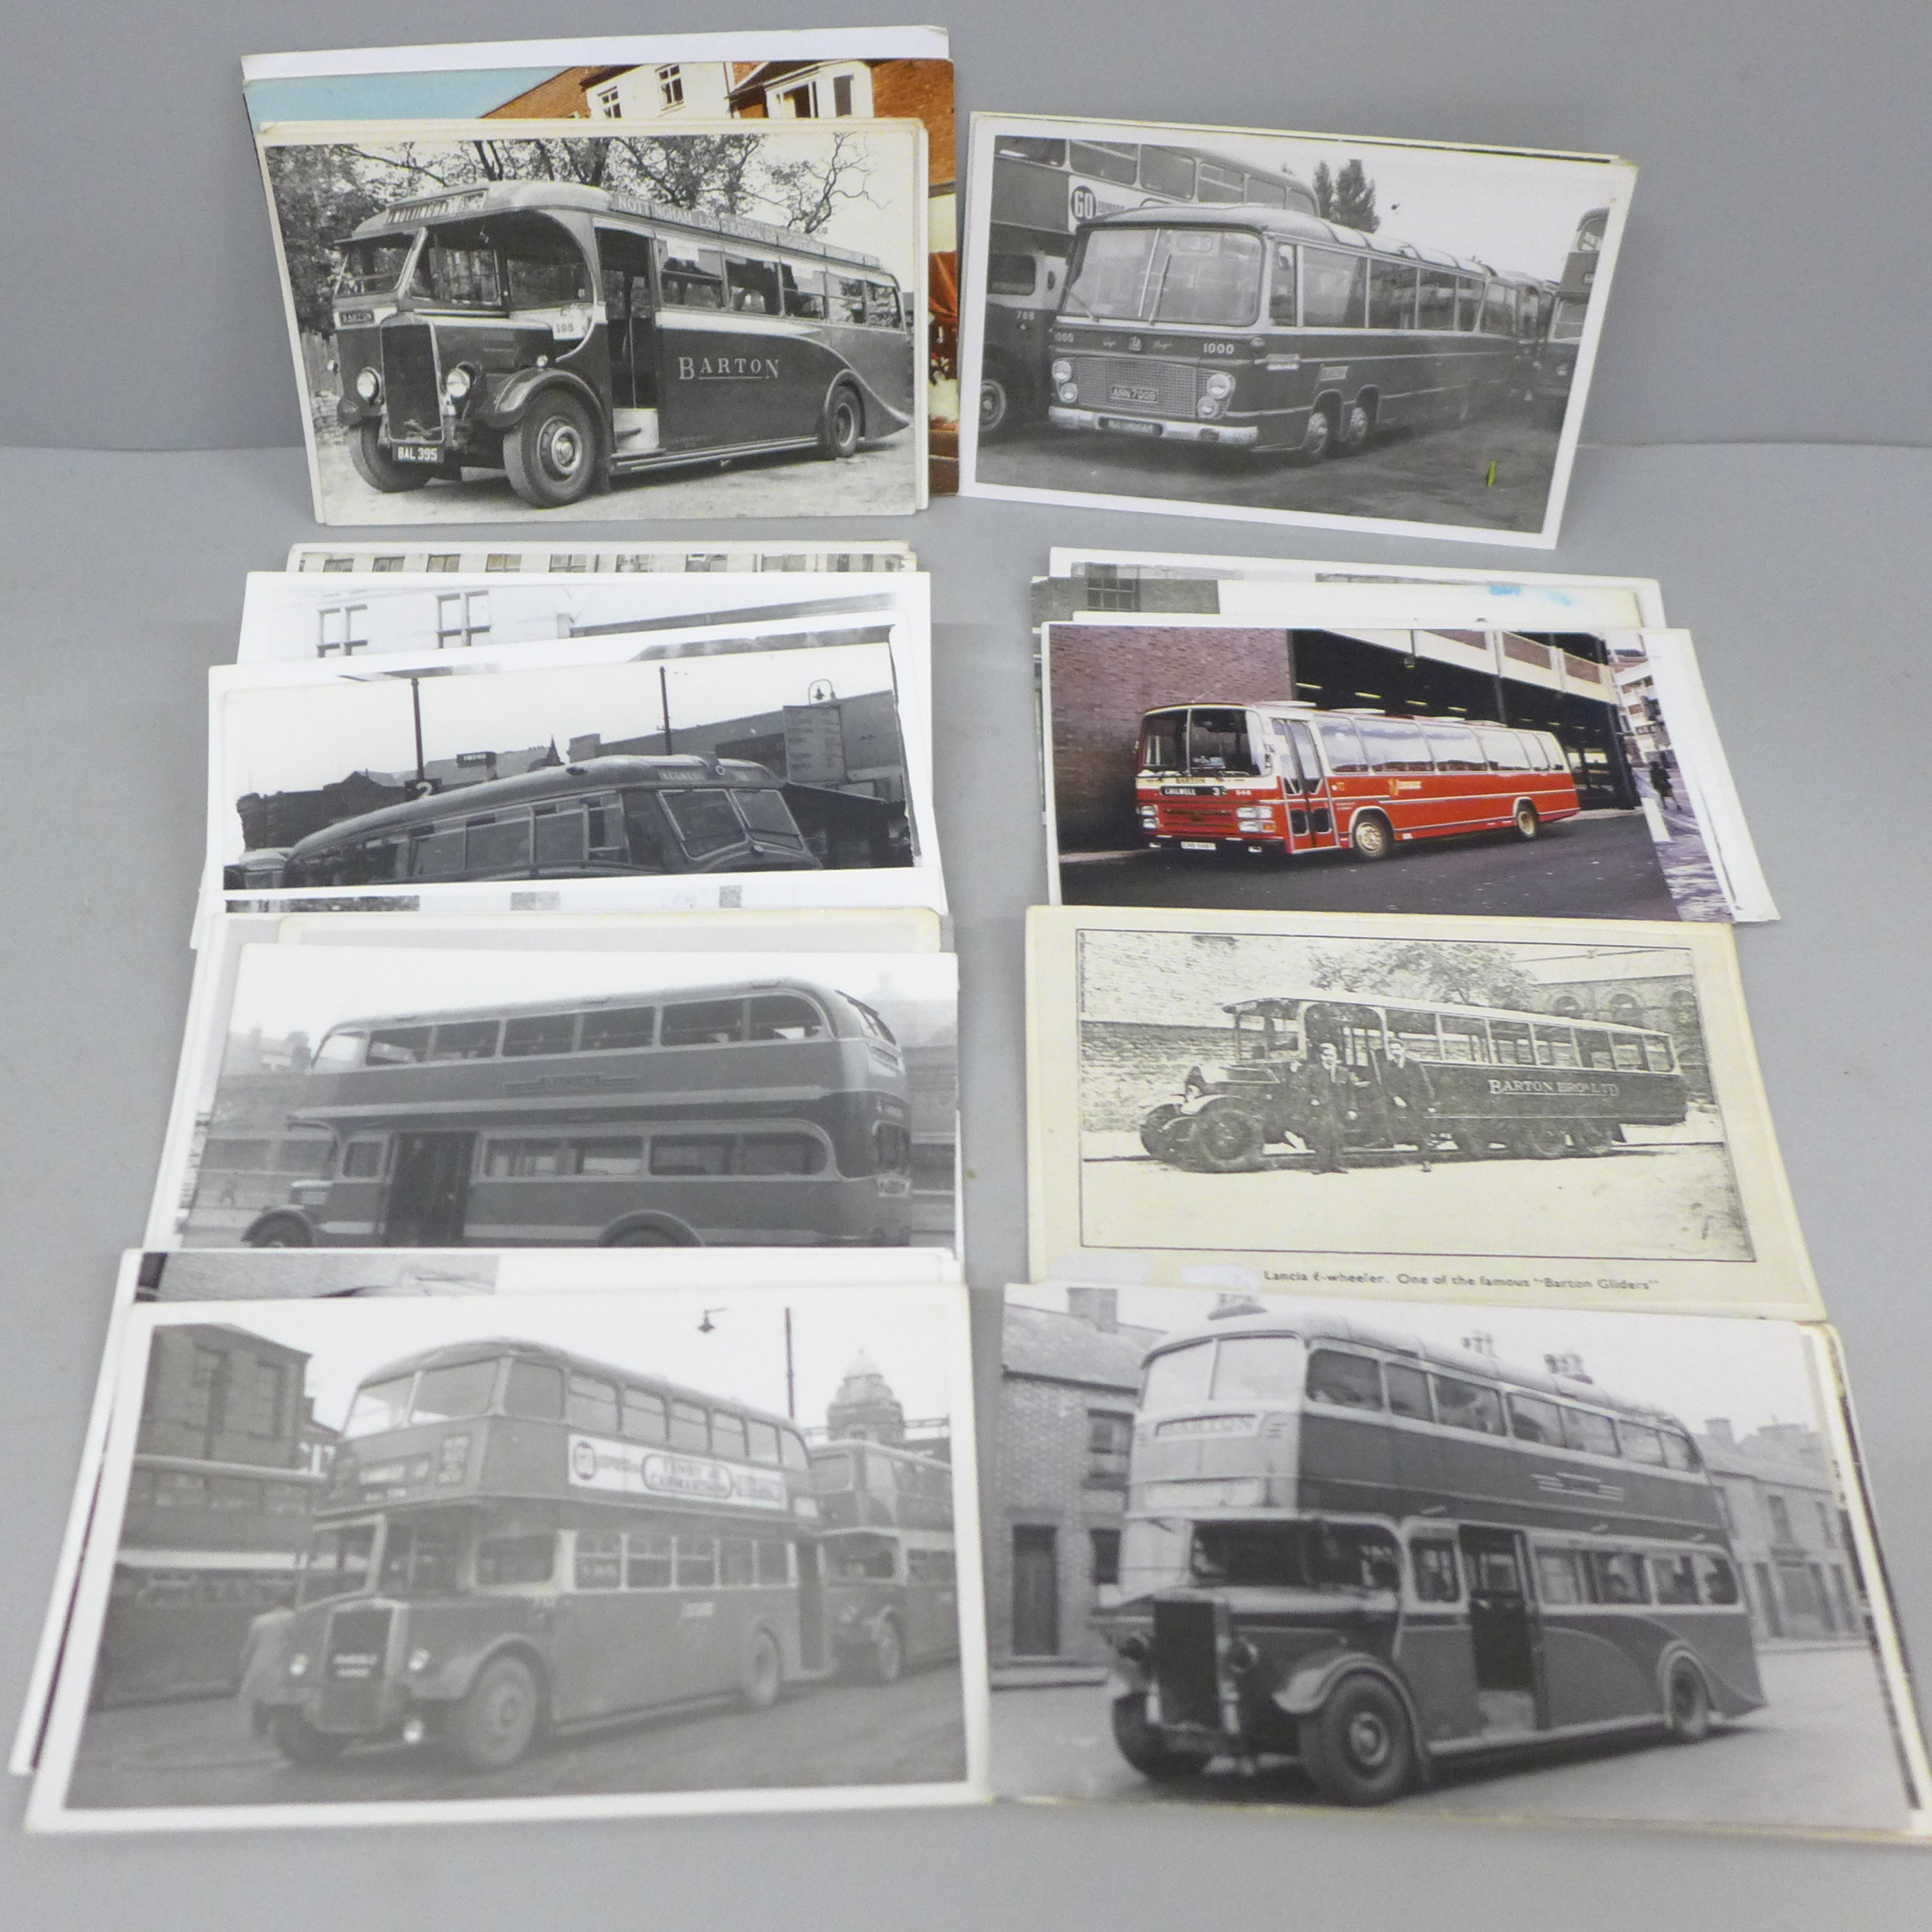 Approximately 45 Barton Bus photographs